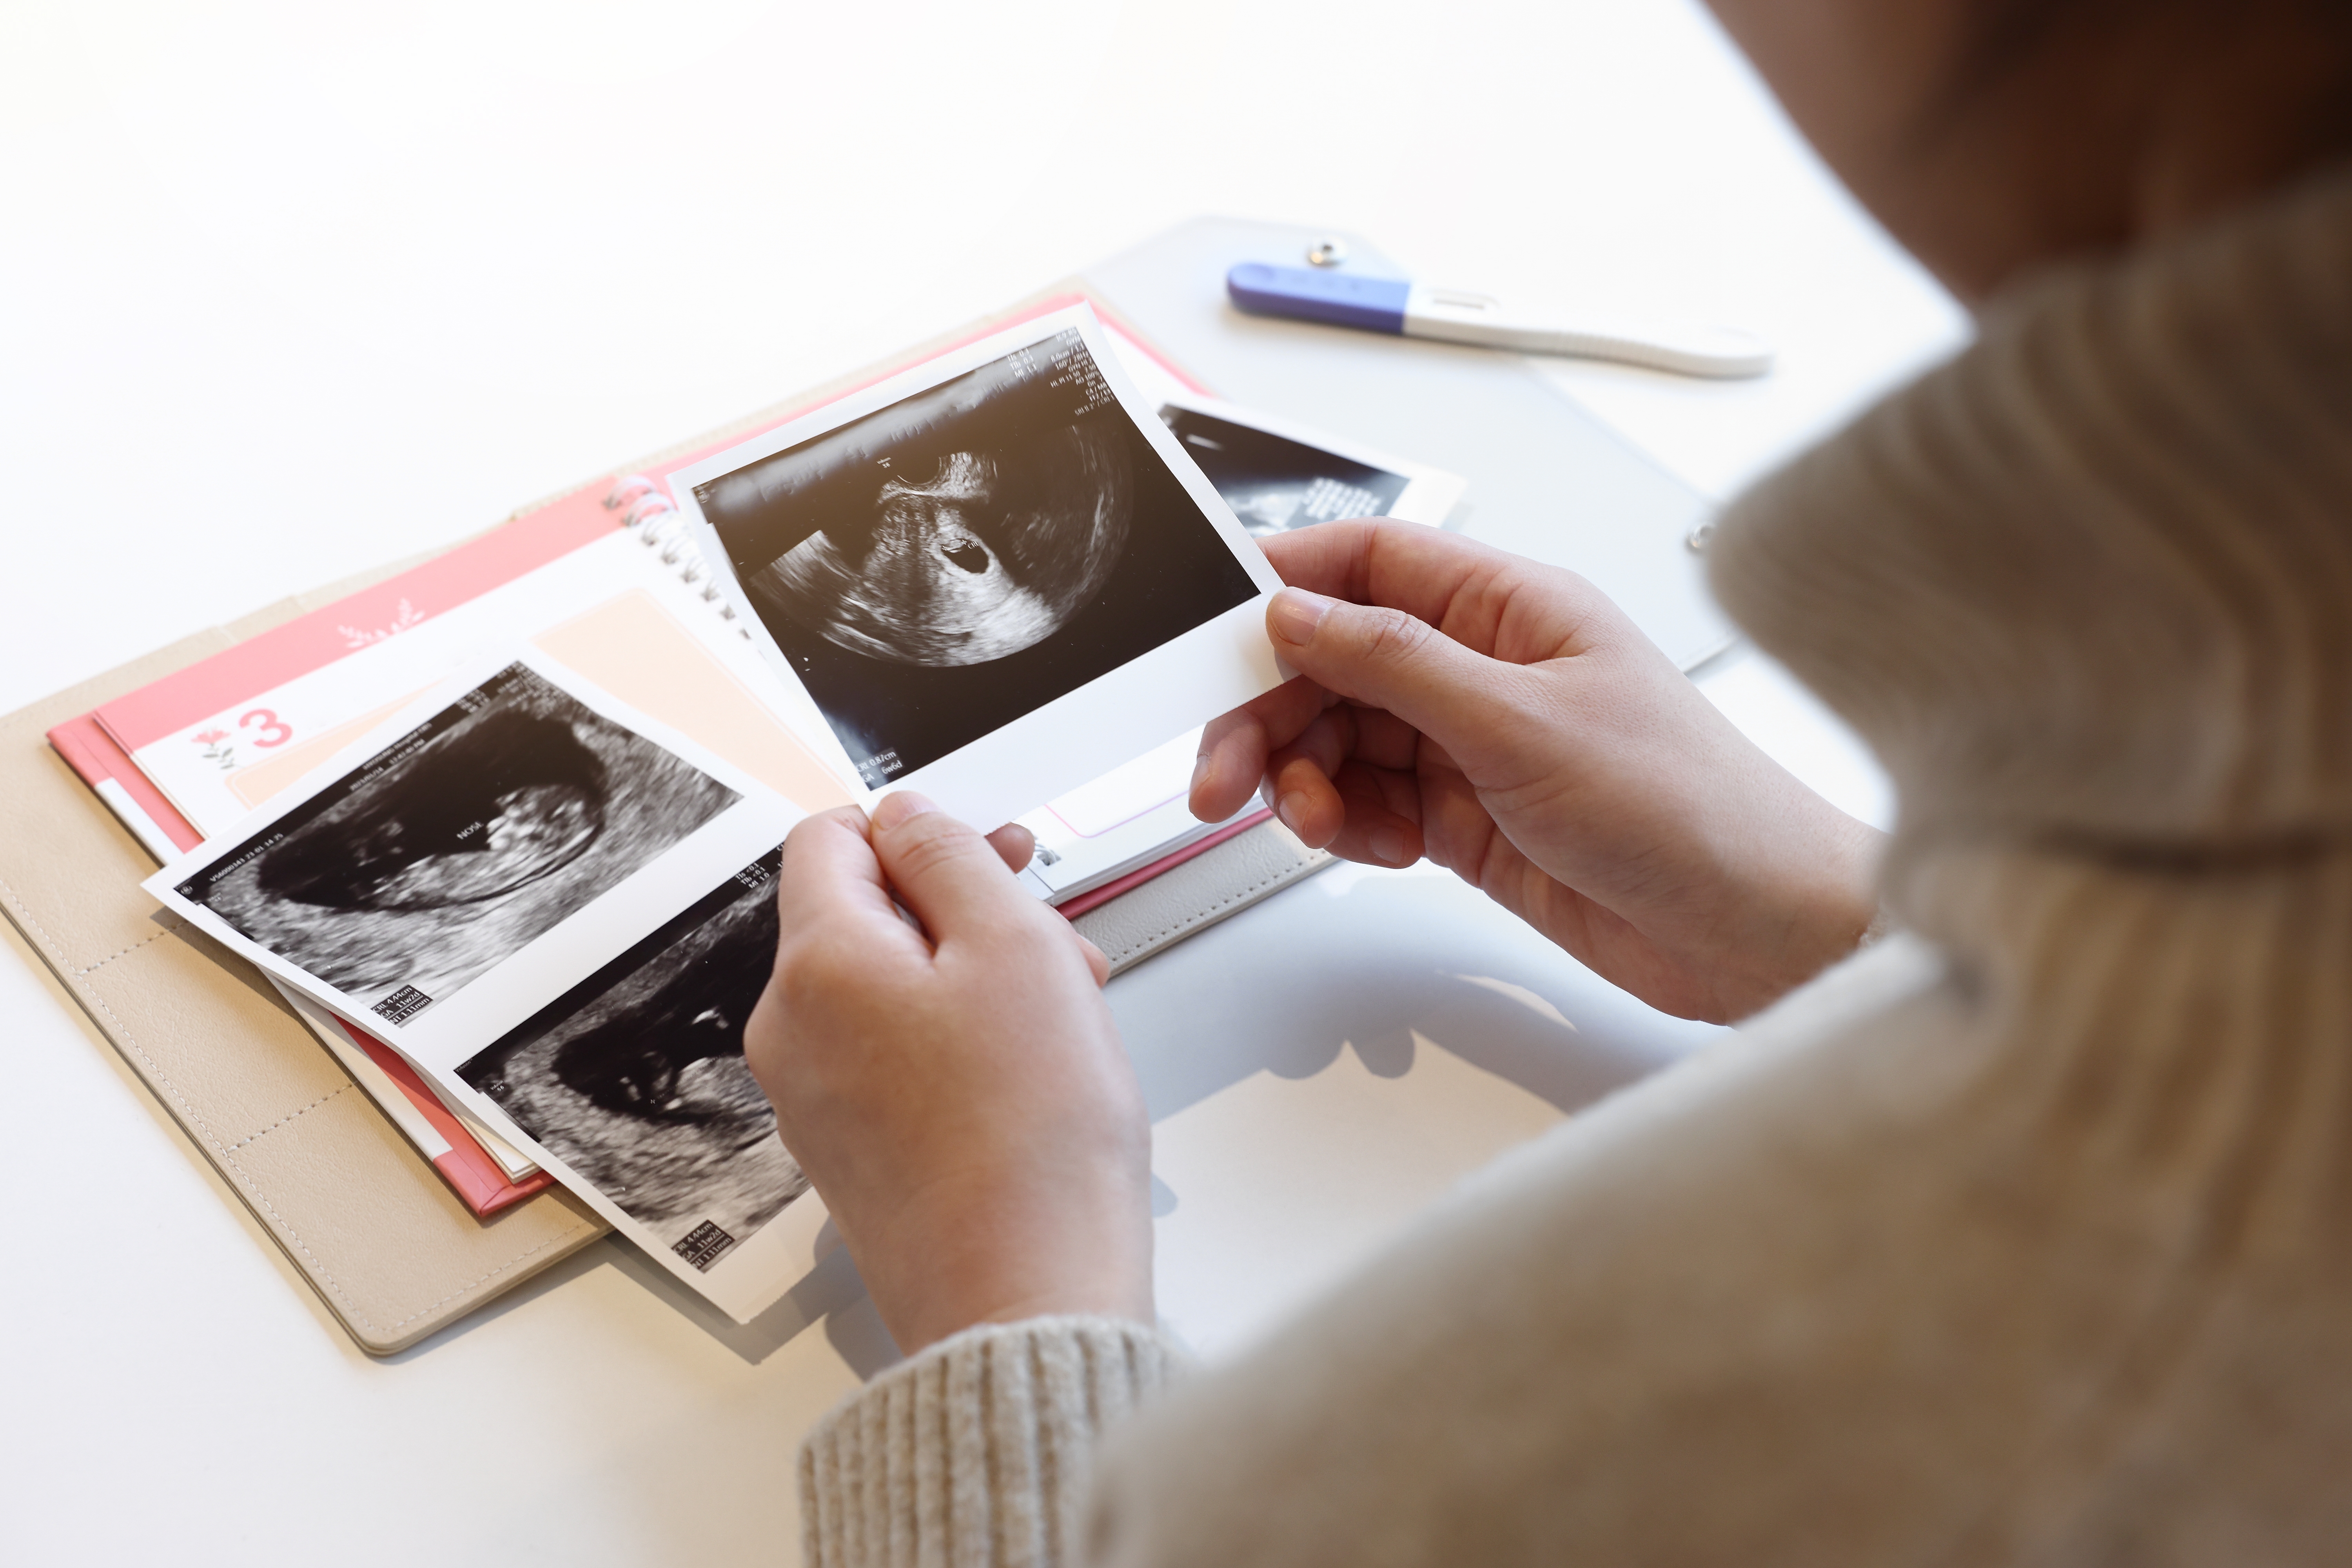 Una mujer embarazada | Fuente: Shutterstock